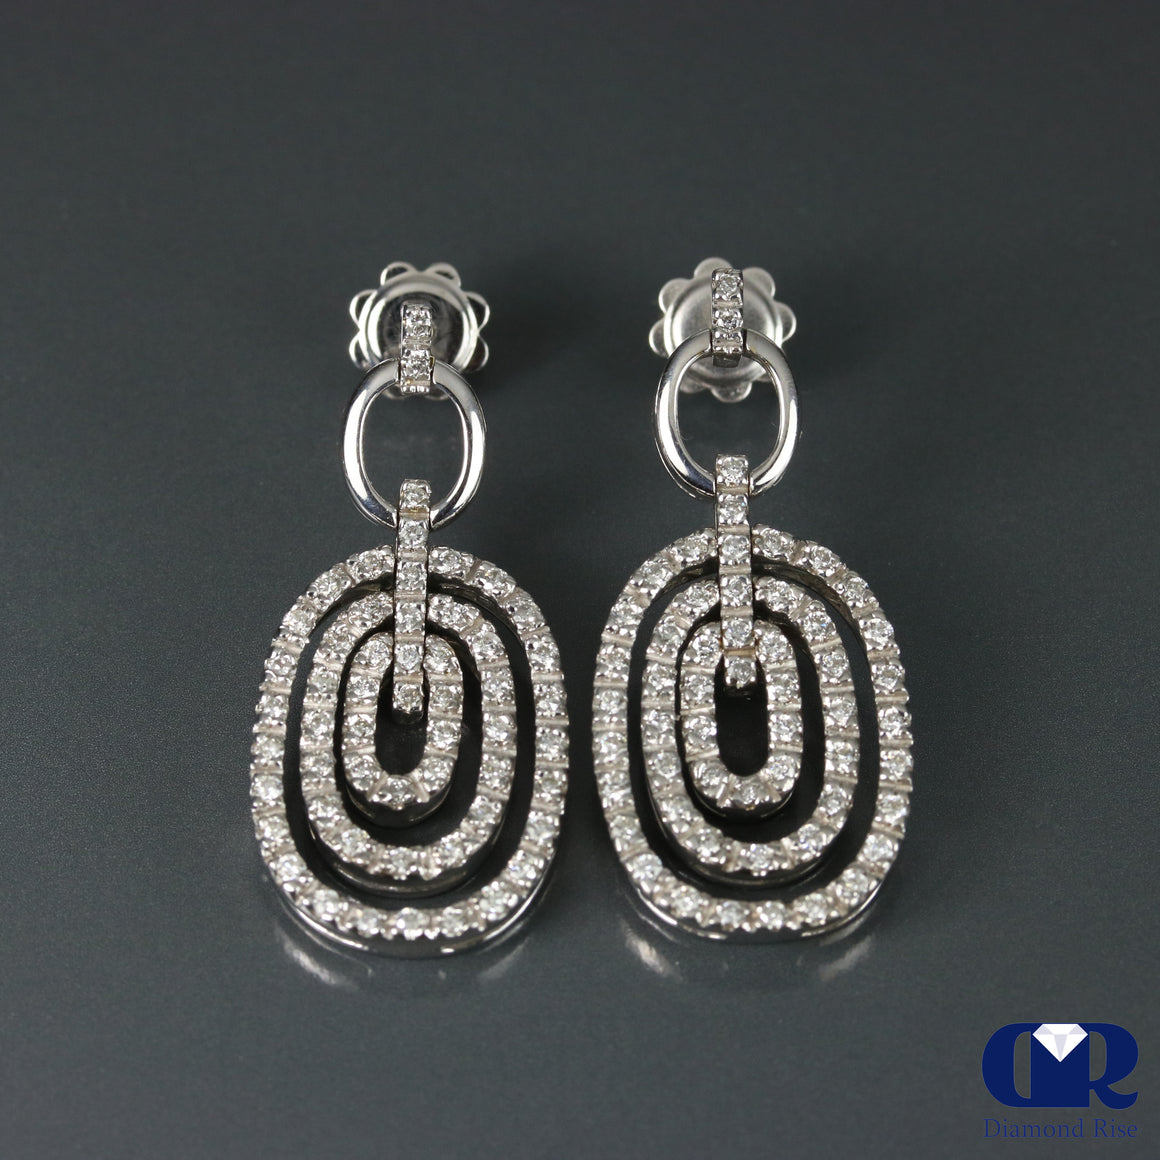 1.04 Ct Diamond Dangle Drop Earrings 18K White Gold With Post - Diamond Rise Jewelry